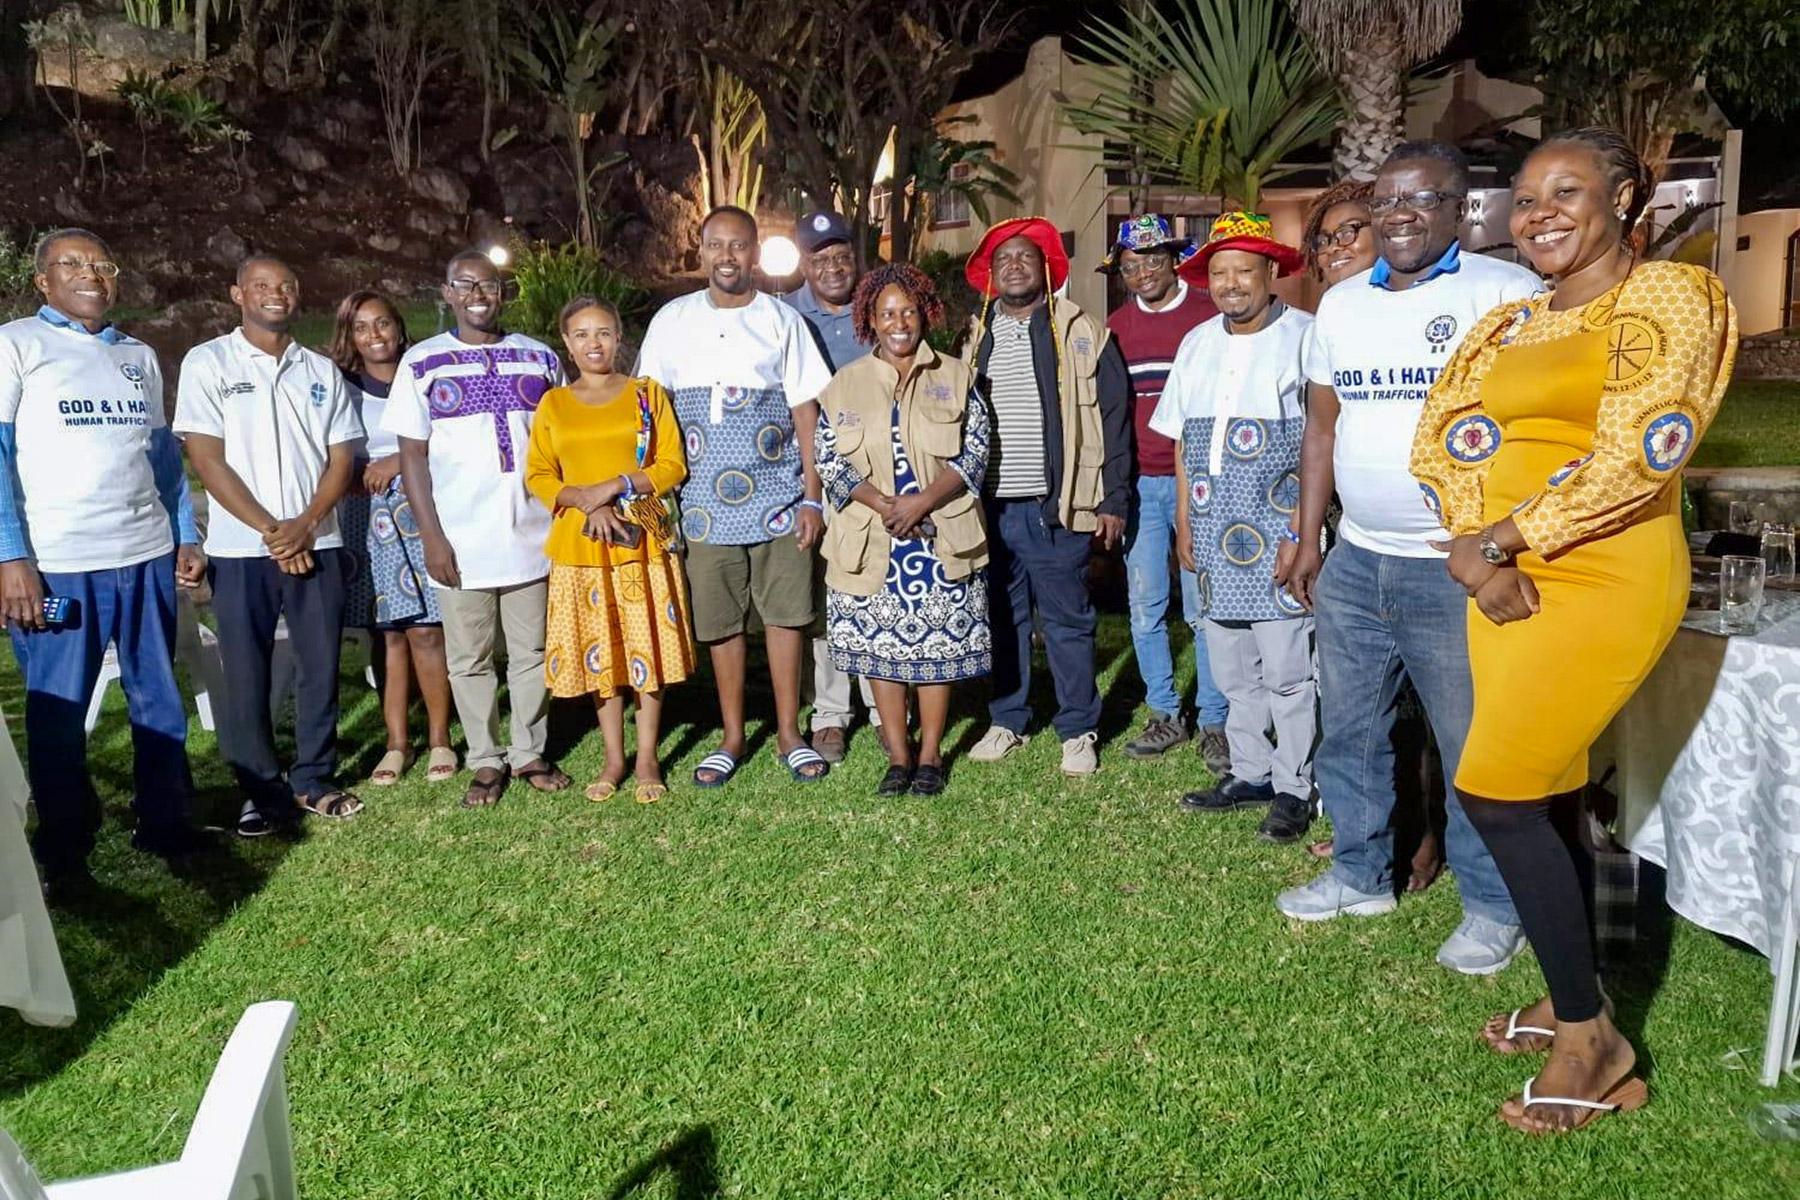 The Symbols of Hope global team comprising LWF and country program staff, during the visit to Zimbabwe. Photo: LWF/Monmo Dahiru Moodi